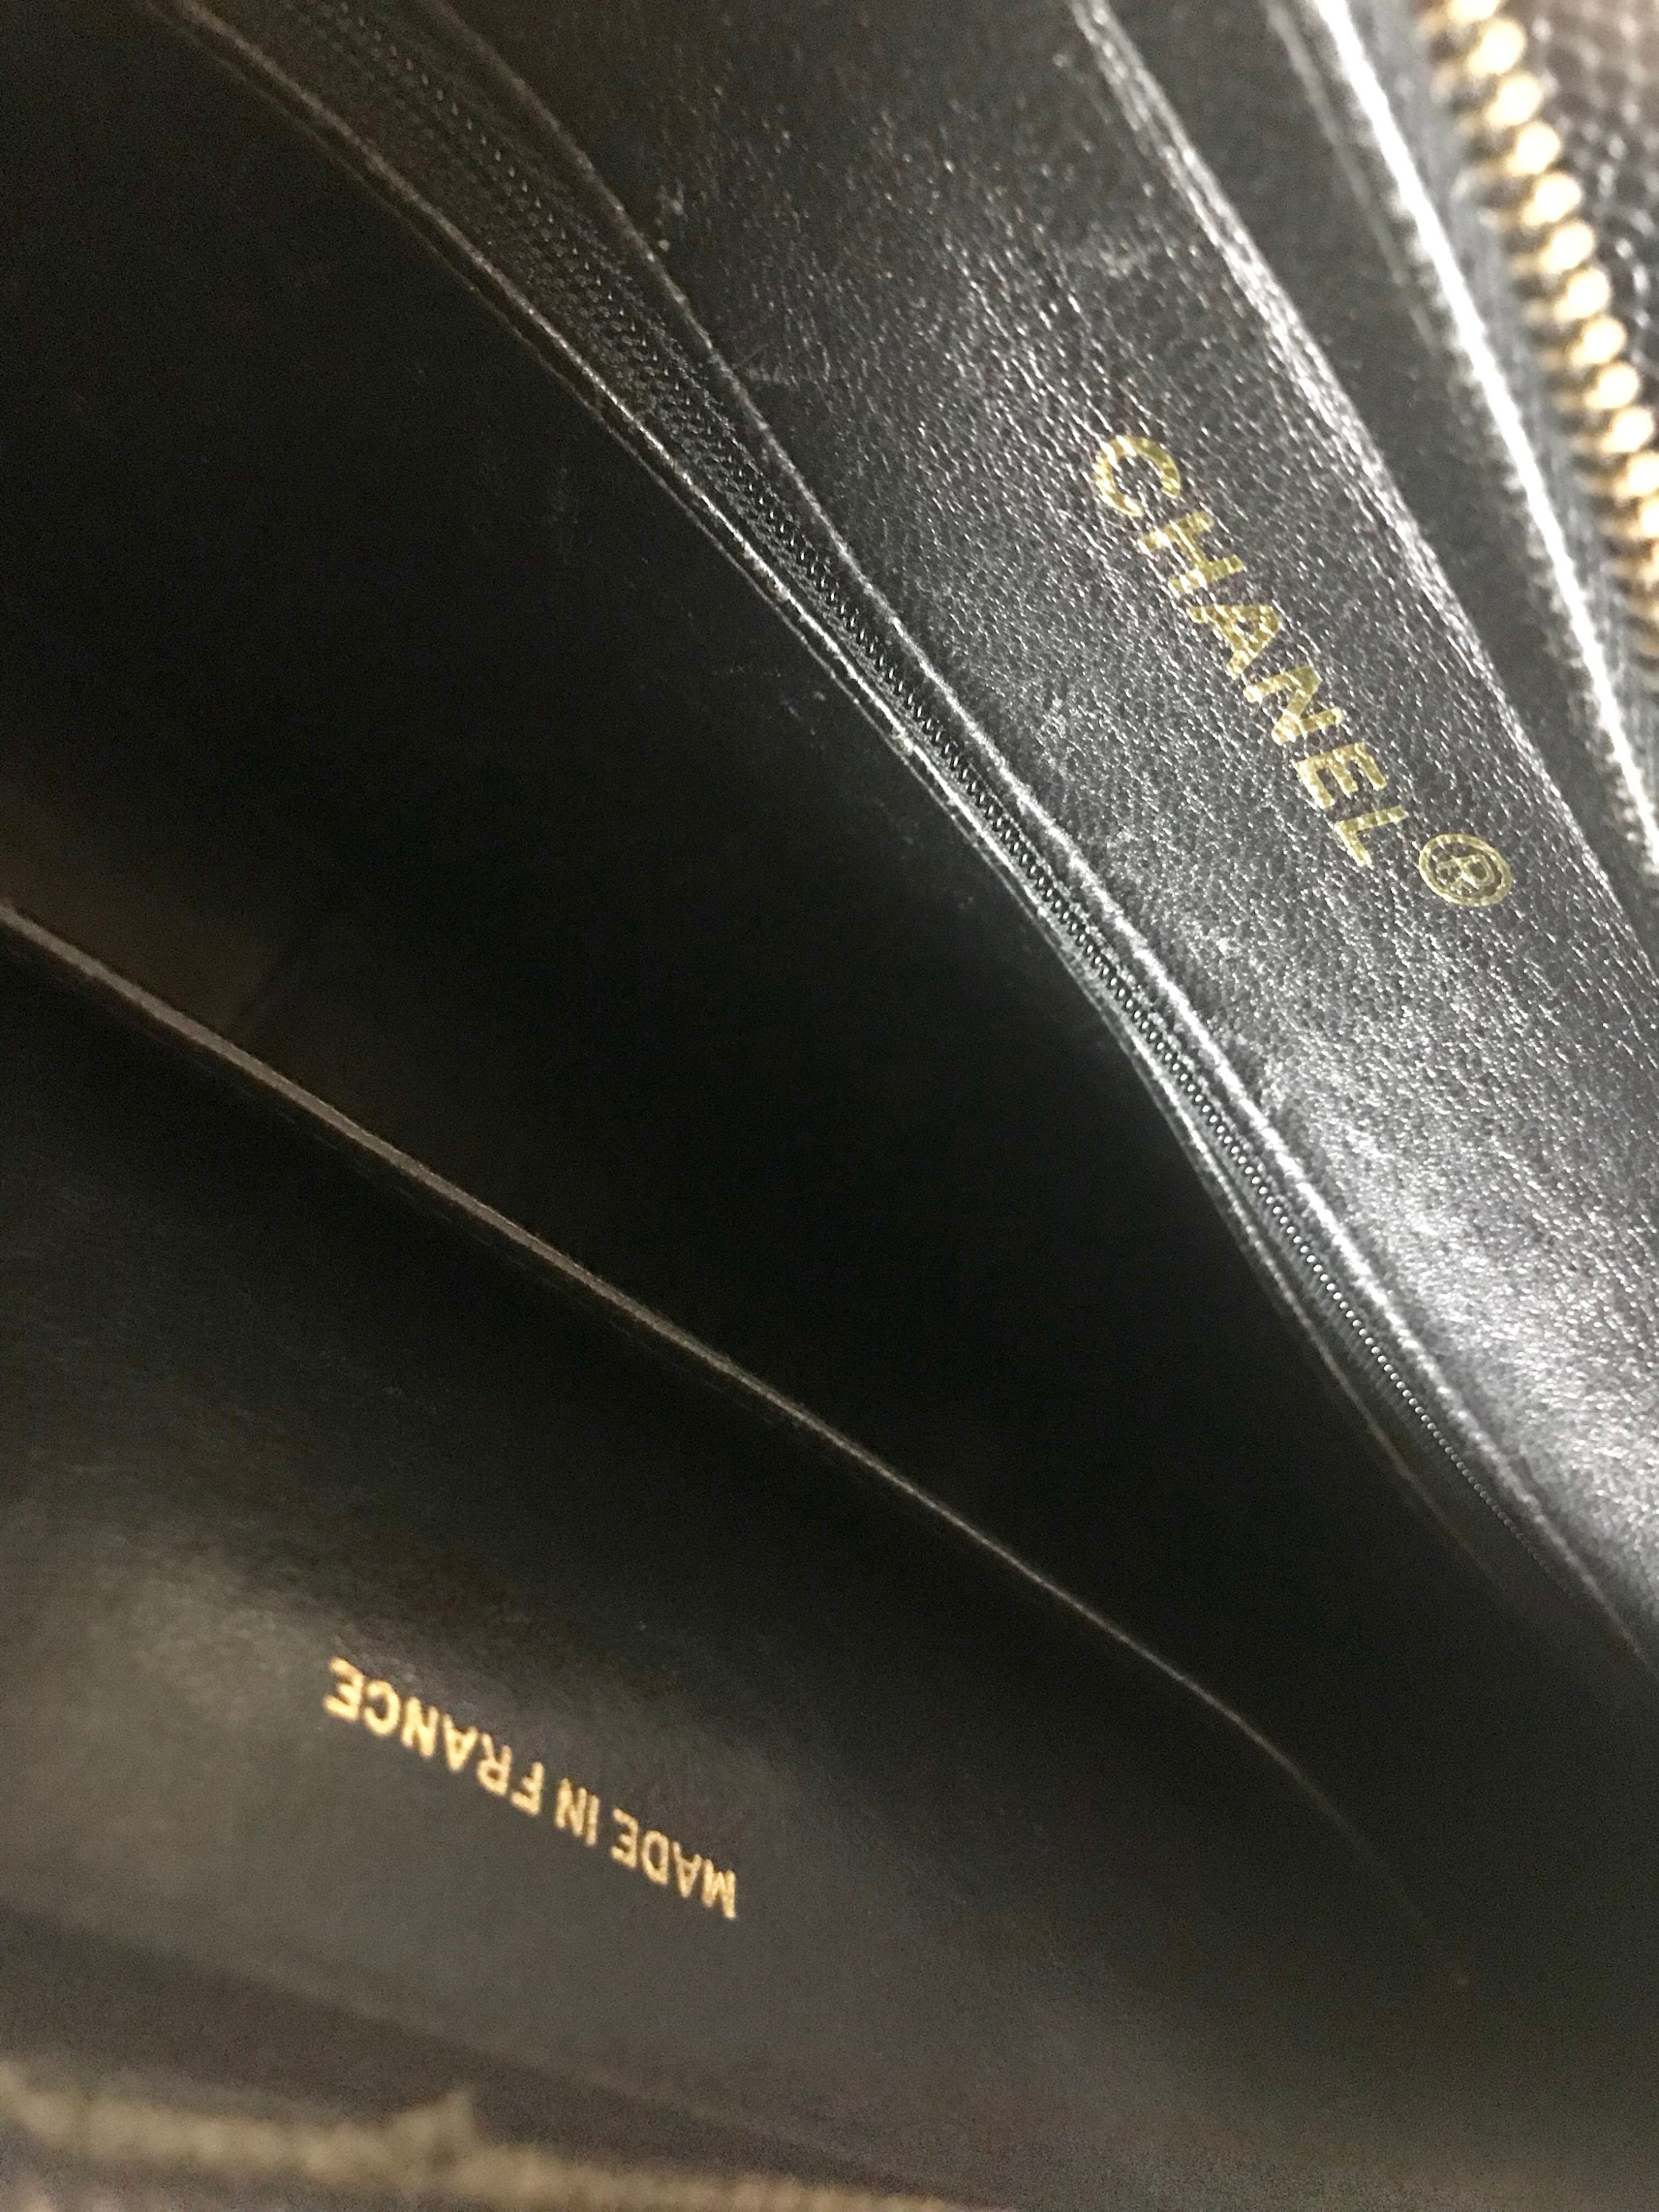 Vintage Chanel CC Logo Black Caviar Chain Shoulder Tote Bag 2590549 02 –  KimmieBBags LLC